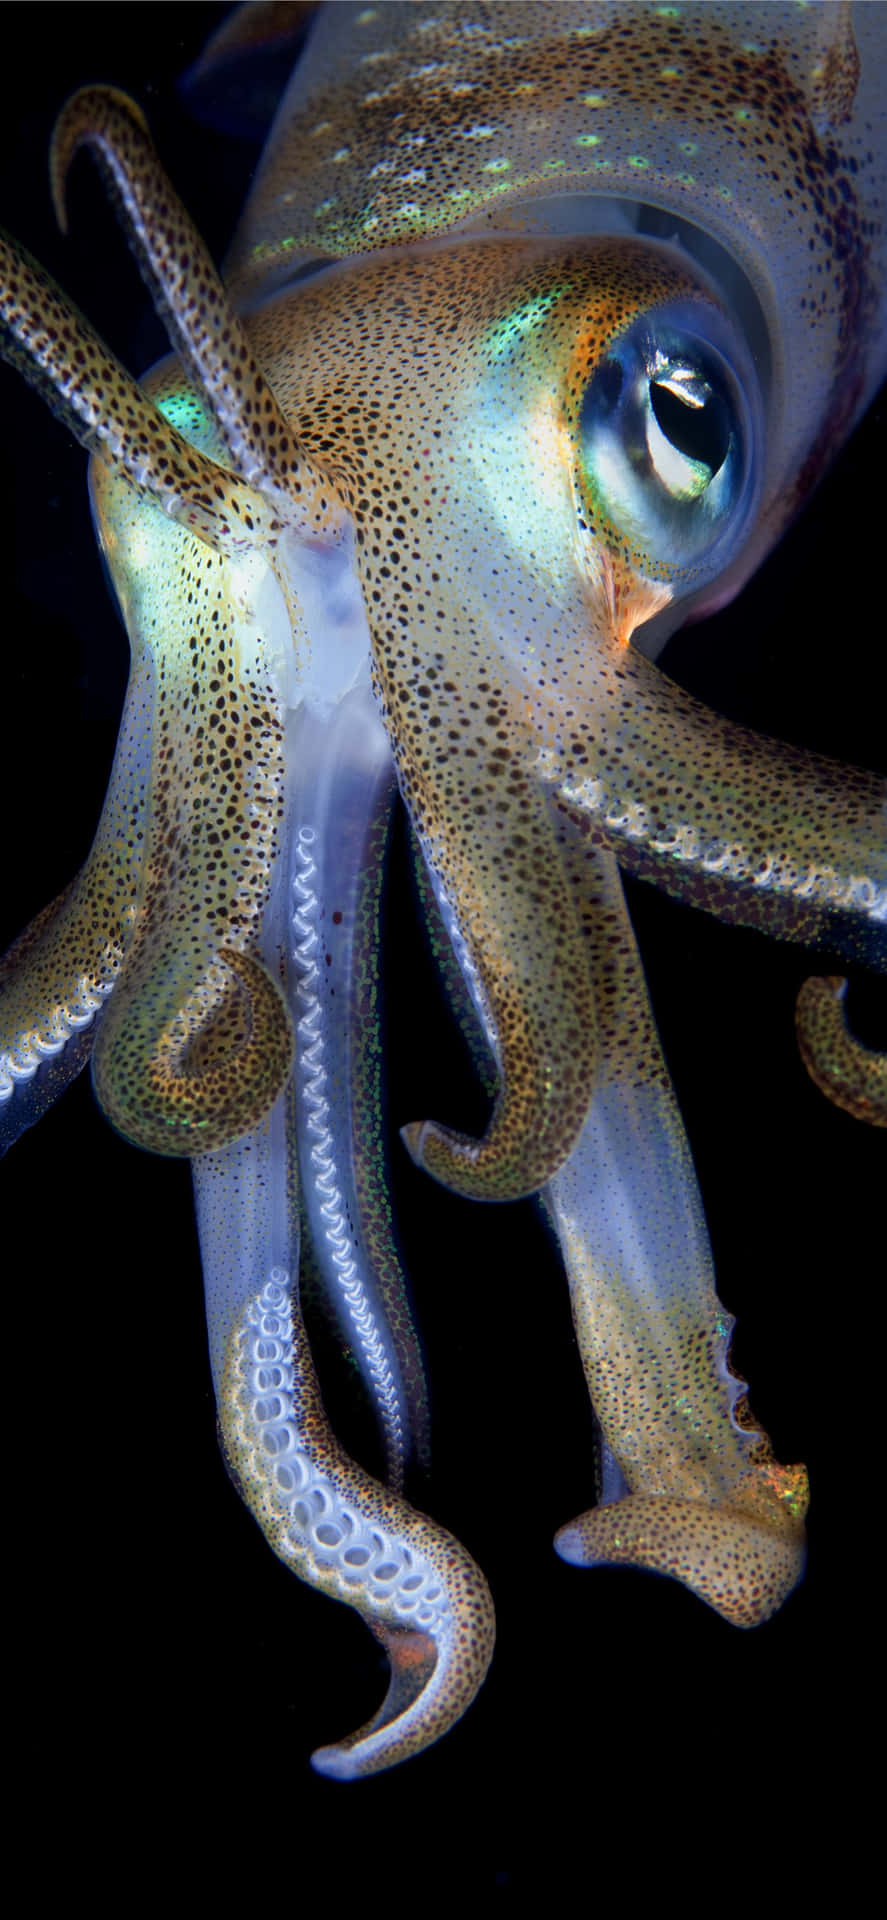 Squid Close Up Underwater.jpg Wallpaper